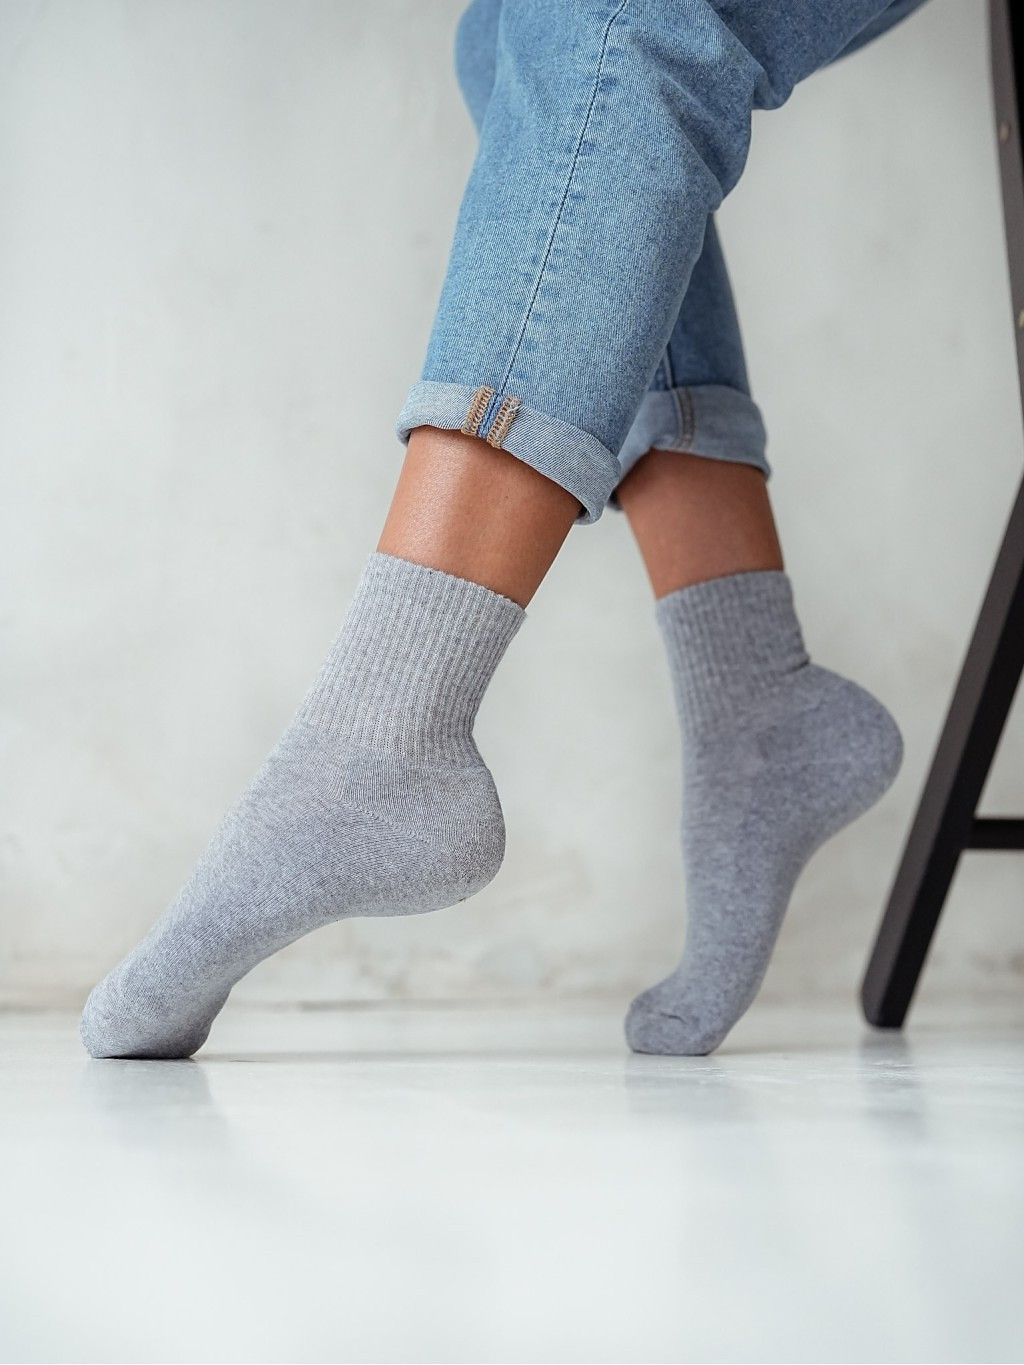 Dámské ponožky Milena 071 Hladké, polofroté 35-41 černá 38-41